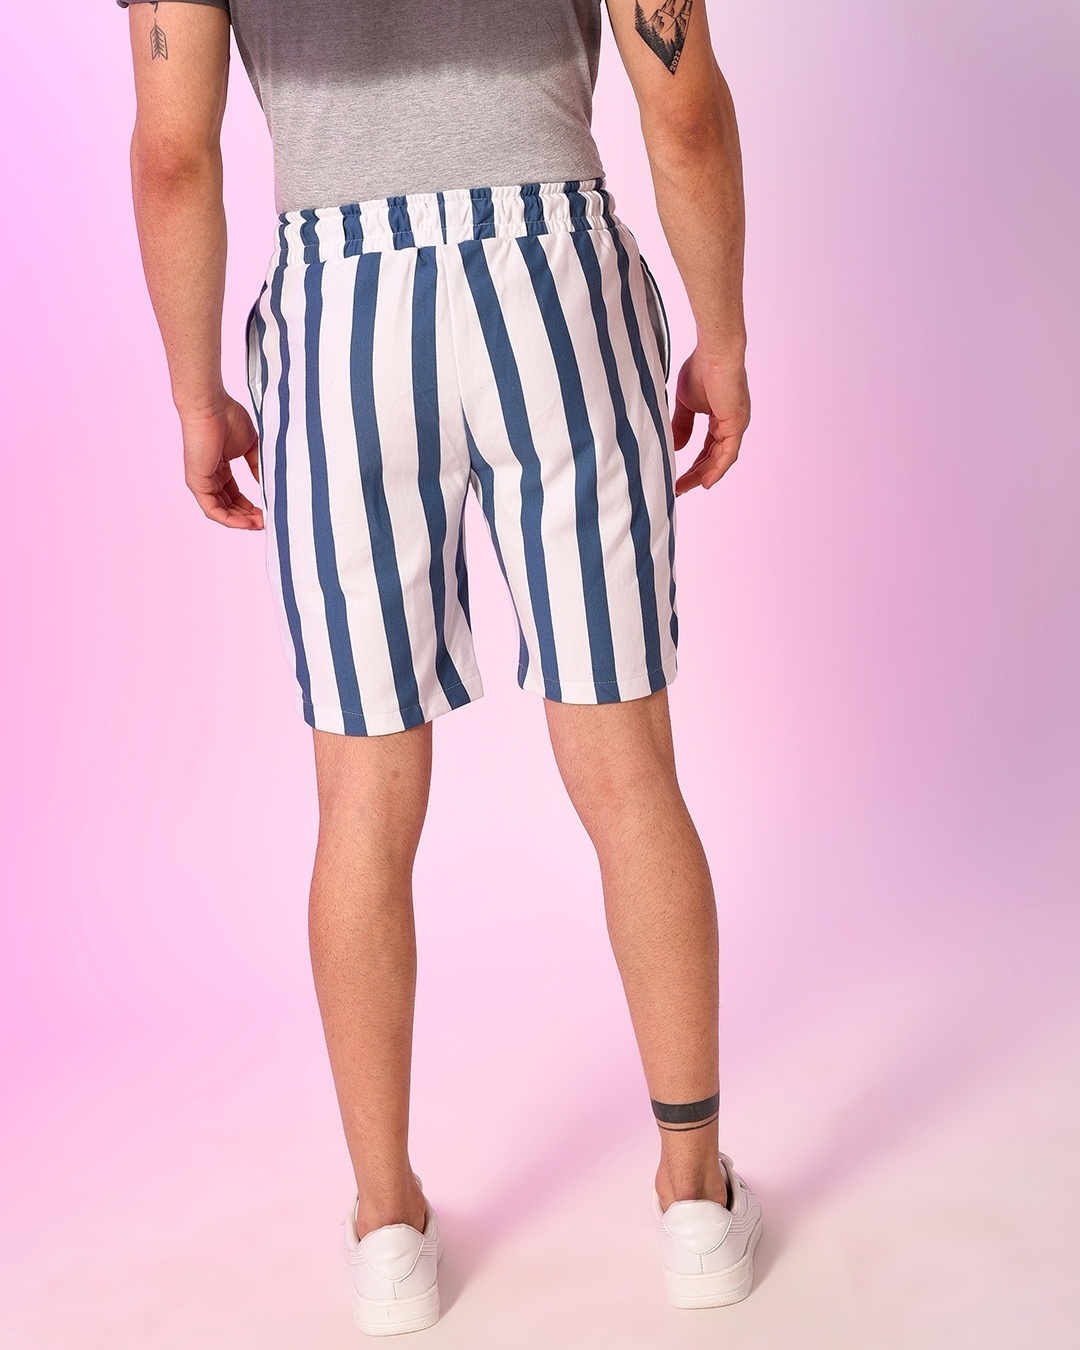 Shop Men's White and Blue Striped Drawstring Shorts-Design